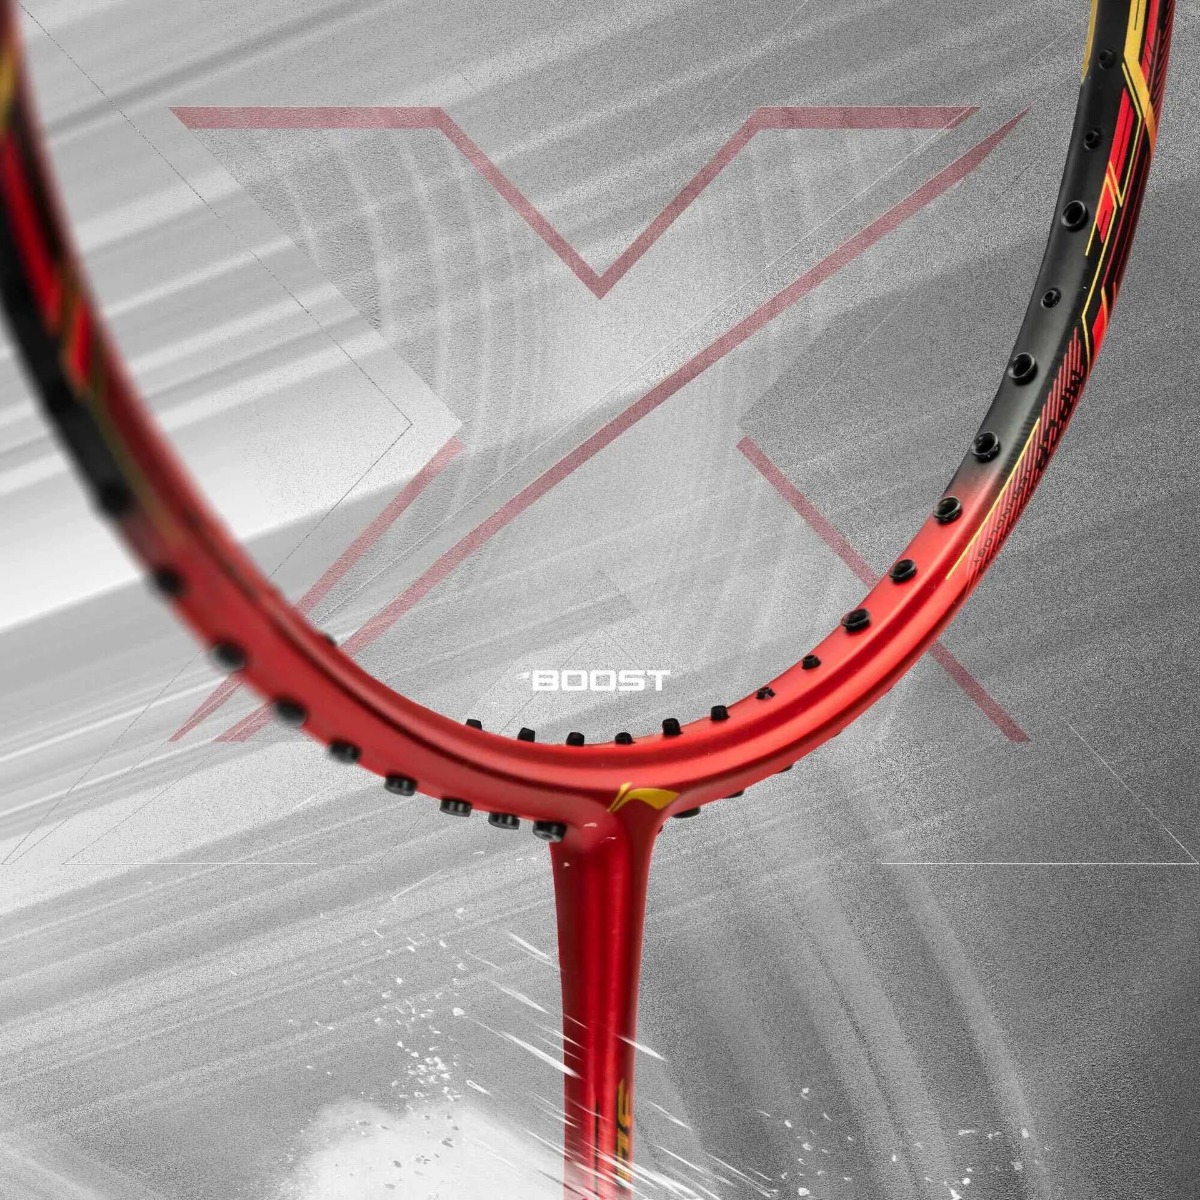 Li-Ning 3D Calibar X Drive Badminton Racket Features High Tech Geometric Design